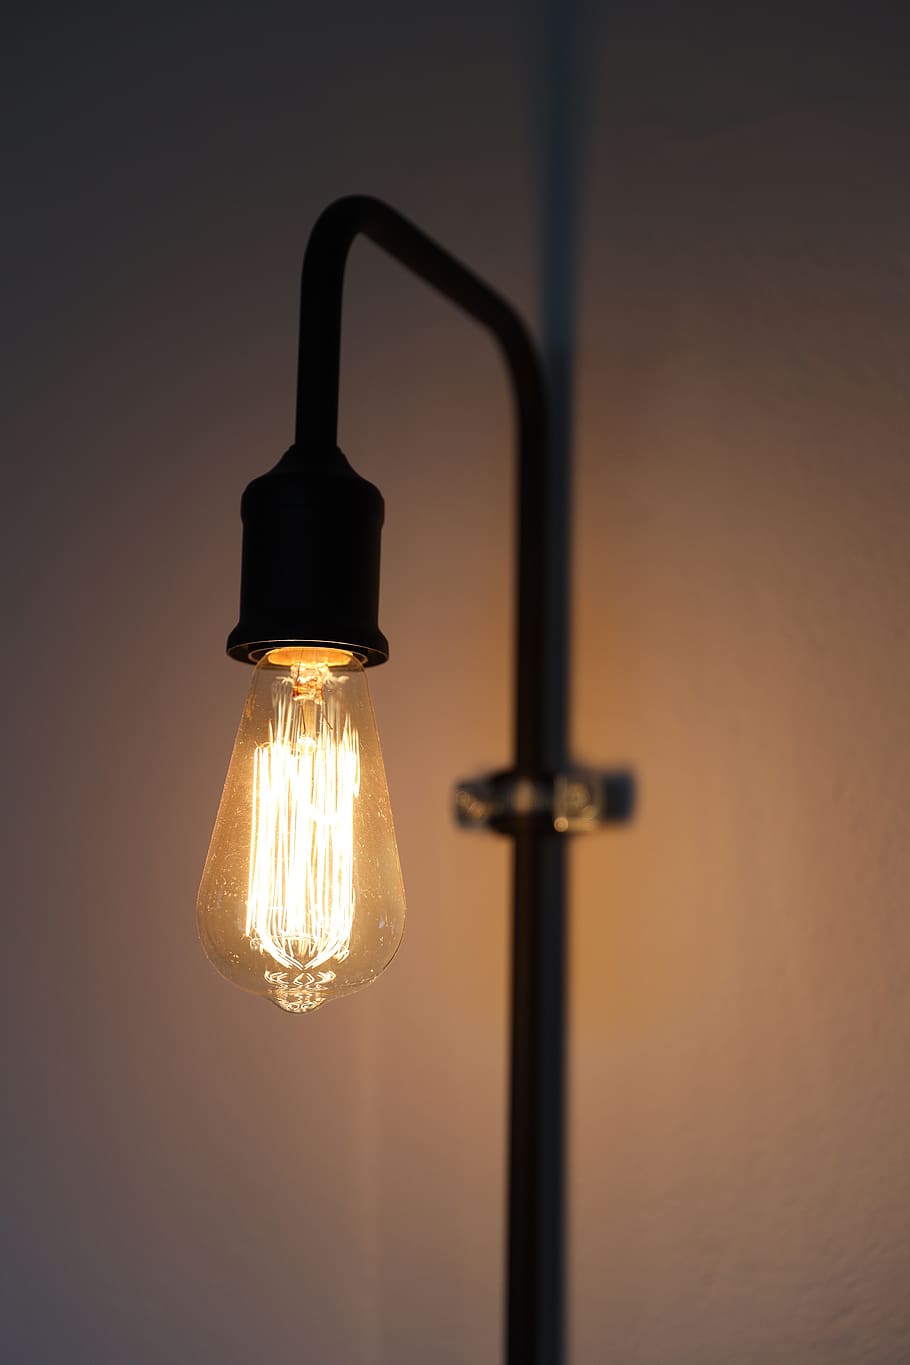 retro, light, vintage, lamp, lighting, energy, current, bulb, nostalgia, technology